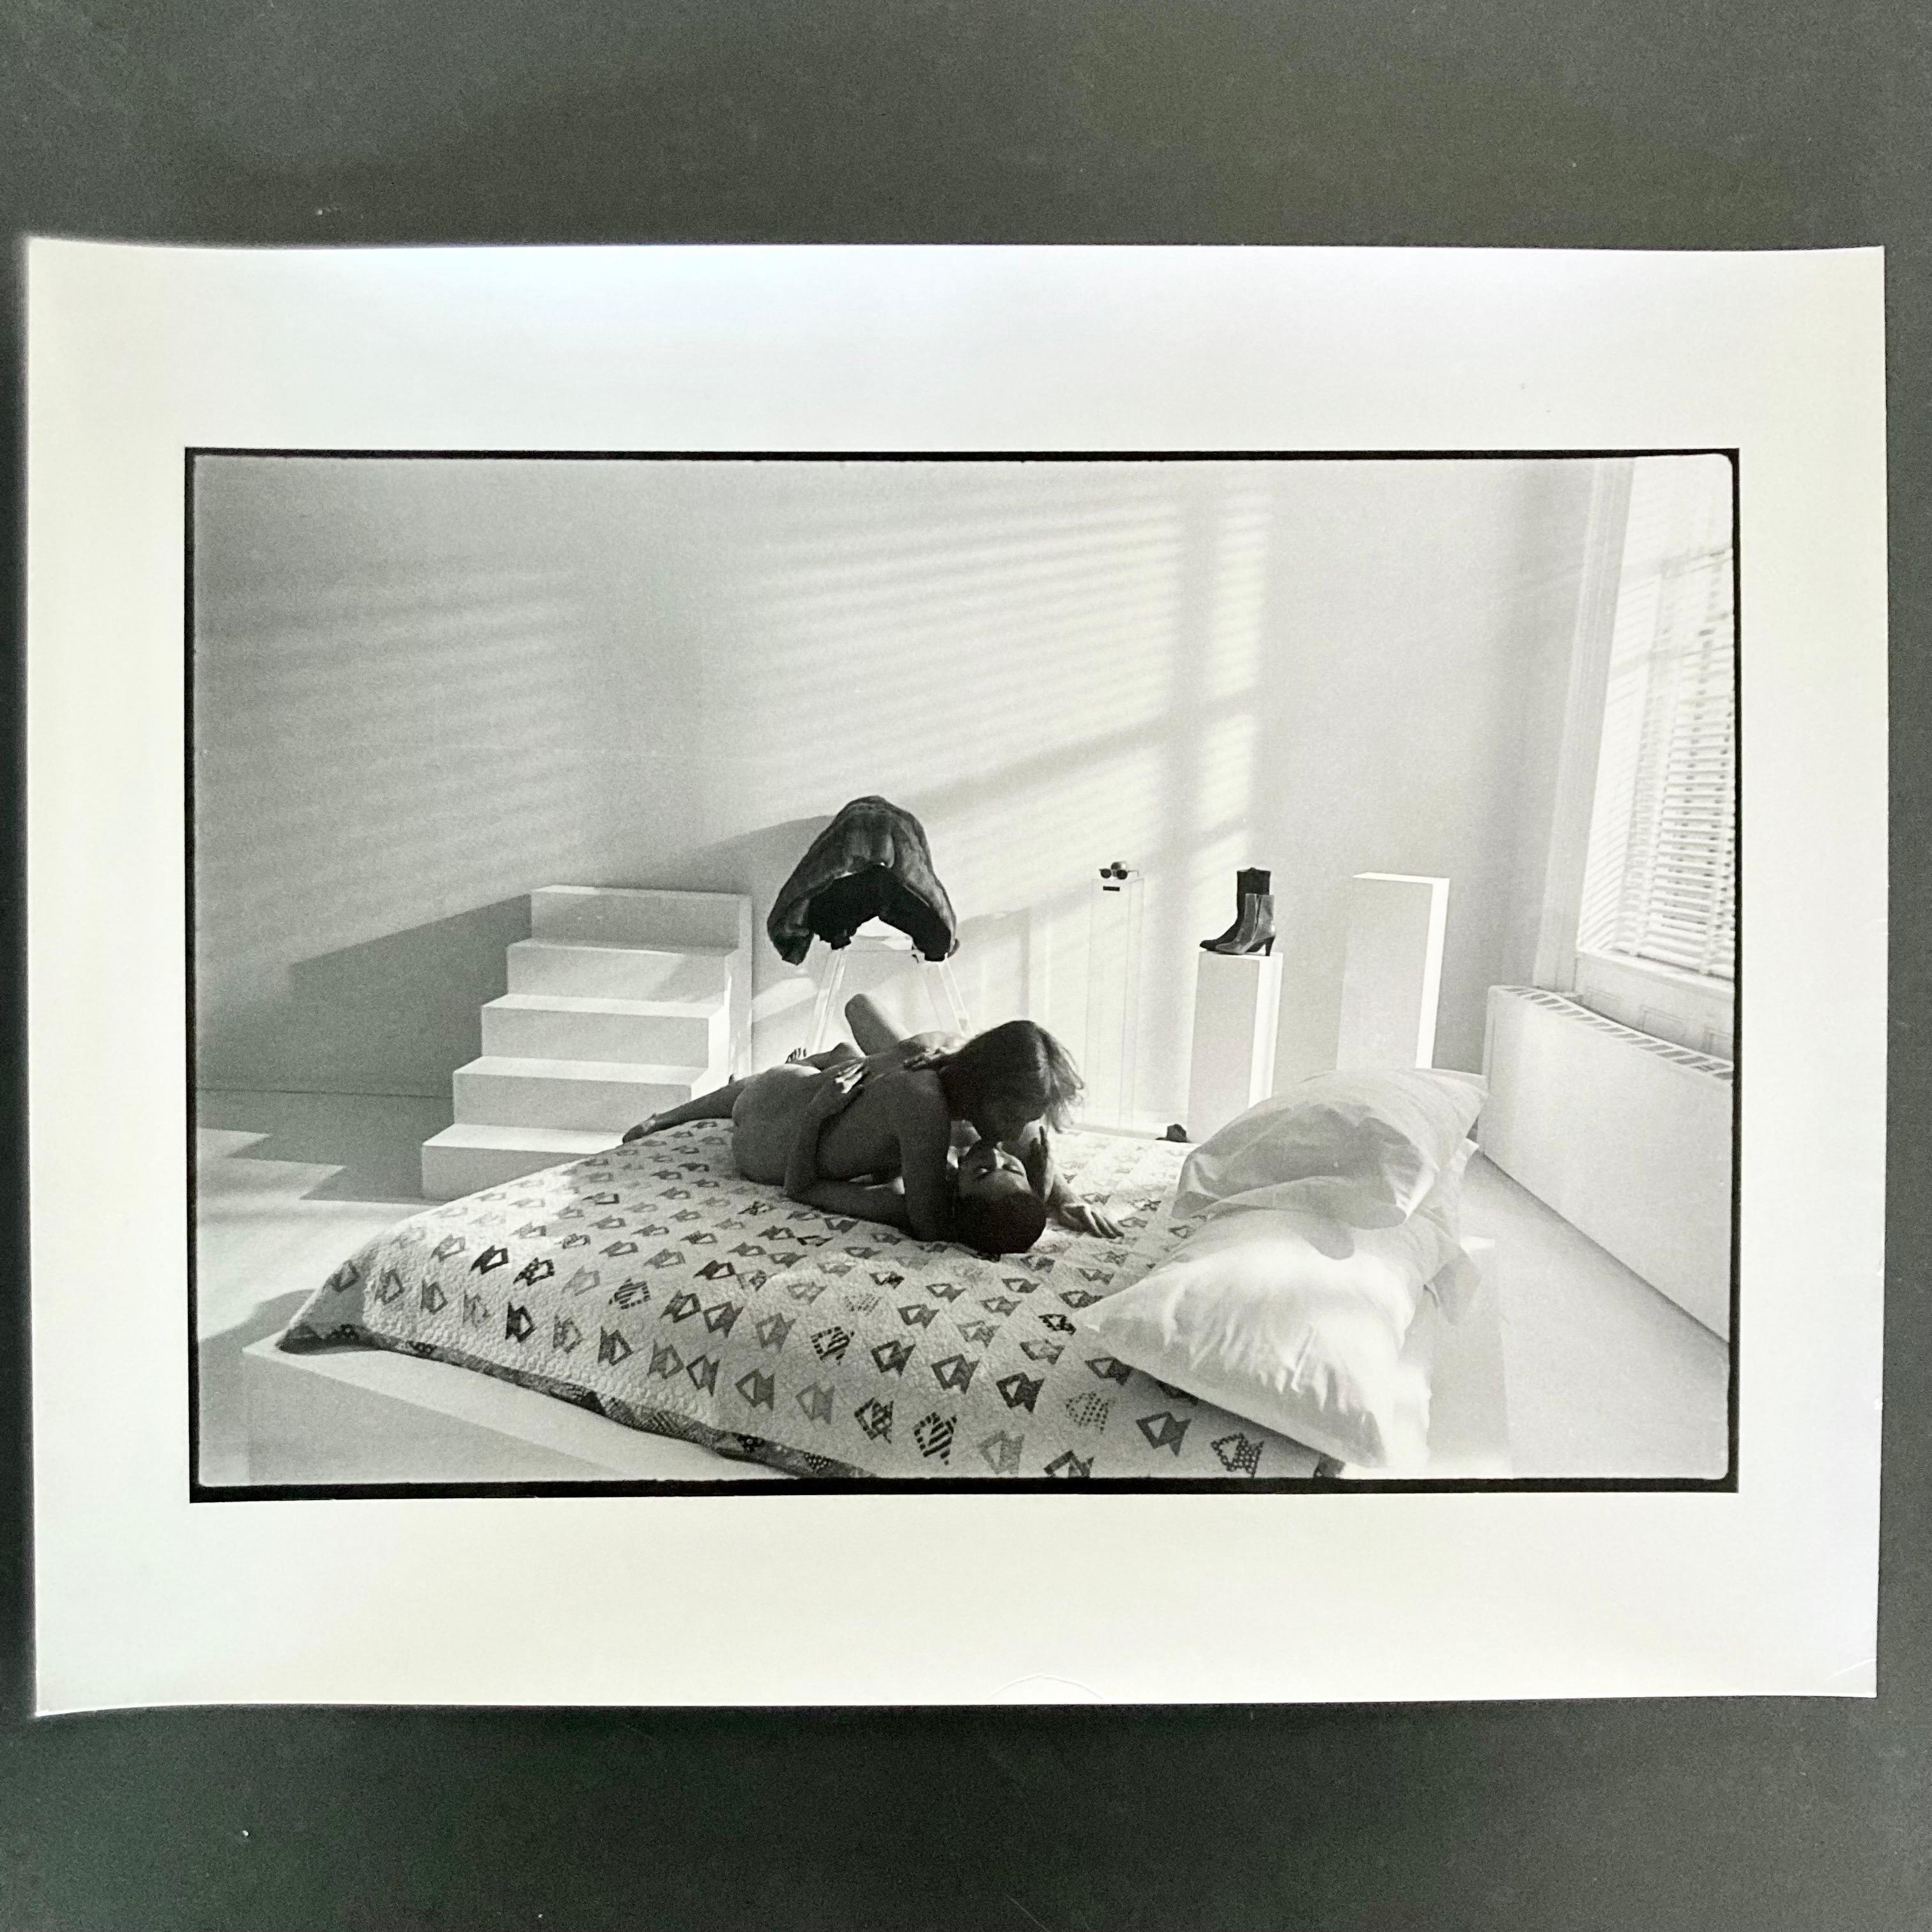 John Lennon and Yoko Ono naked in bed 1980 vintage print by Allan Tannenbaum